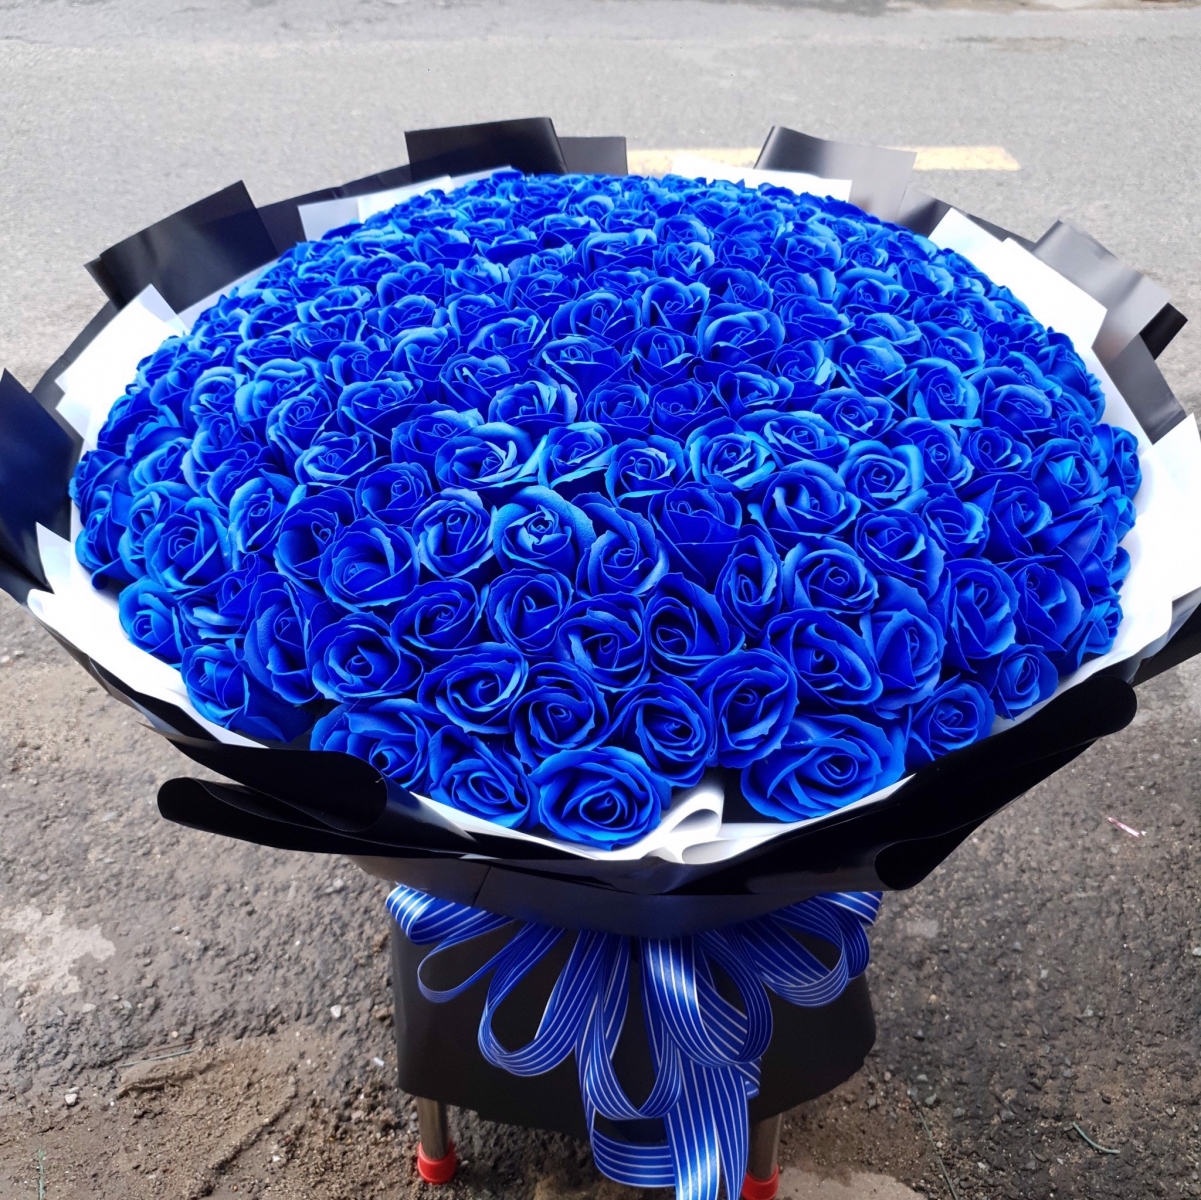 Mua hoa hồng xanh tại Hoa tươi 360